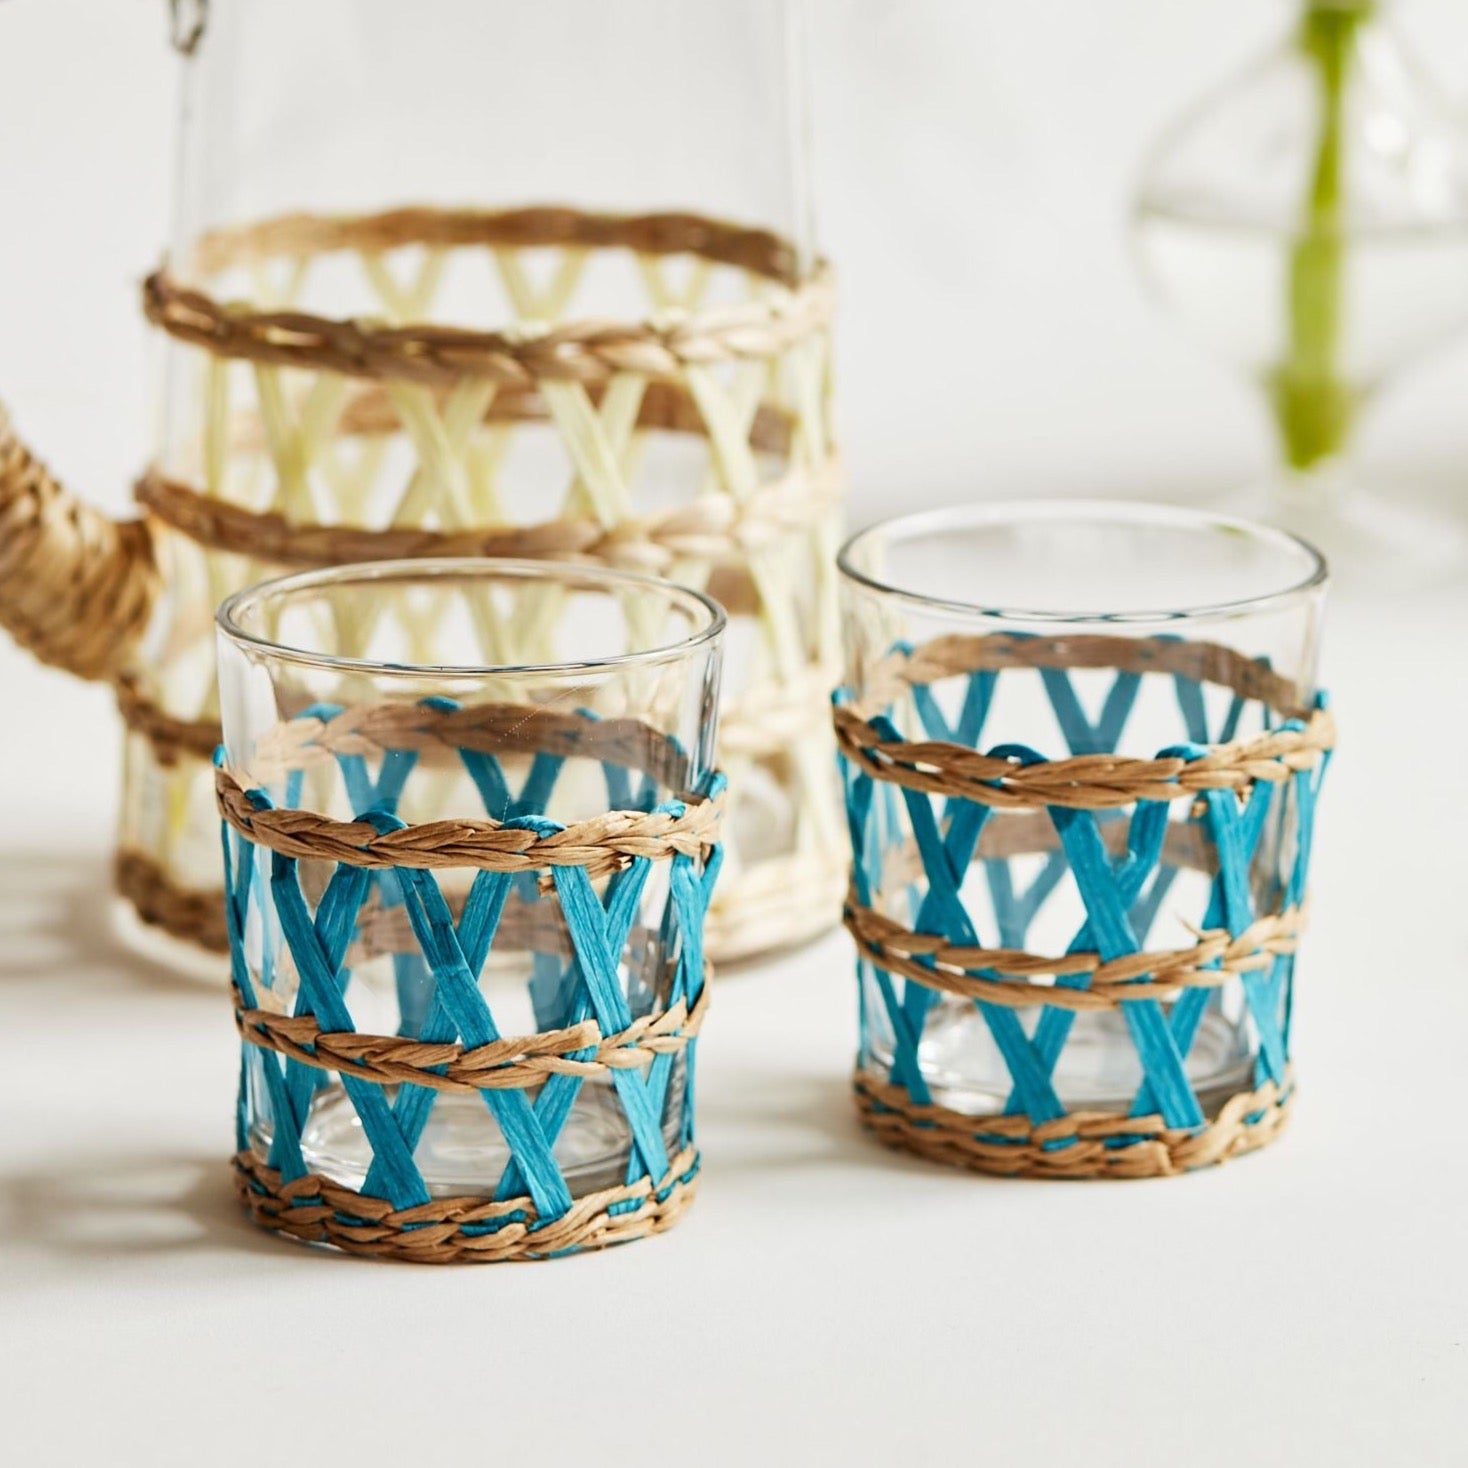 Teal Wicker Water Glass (set of 2)